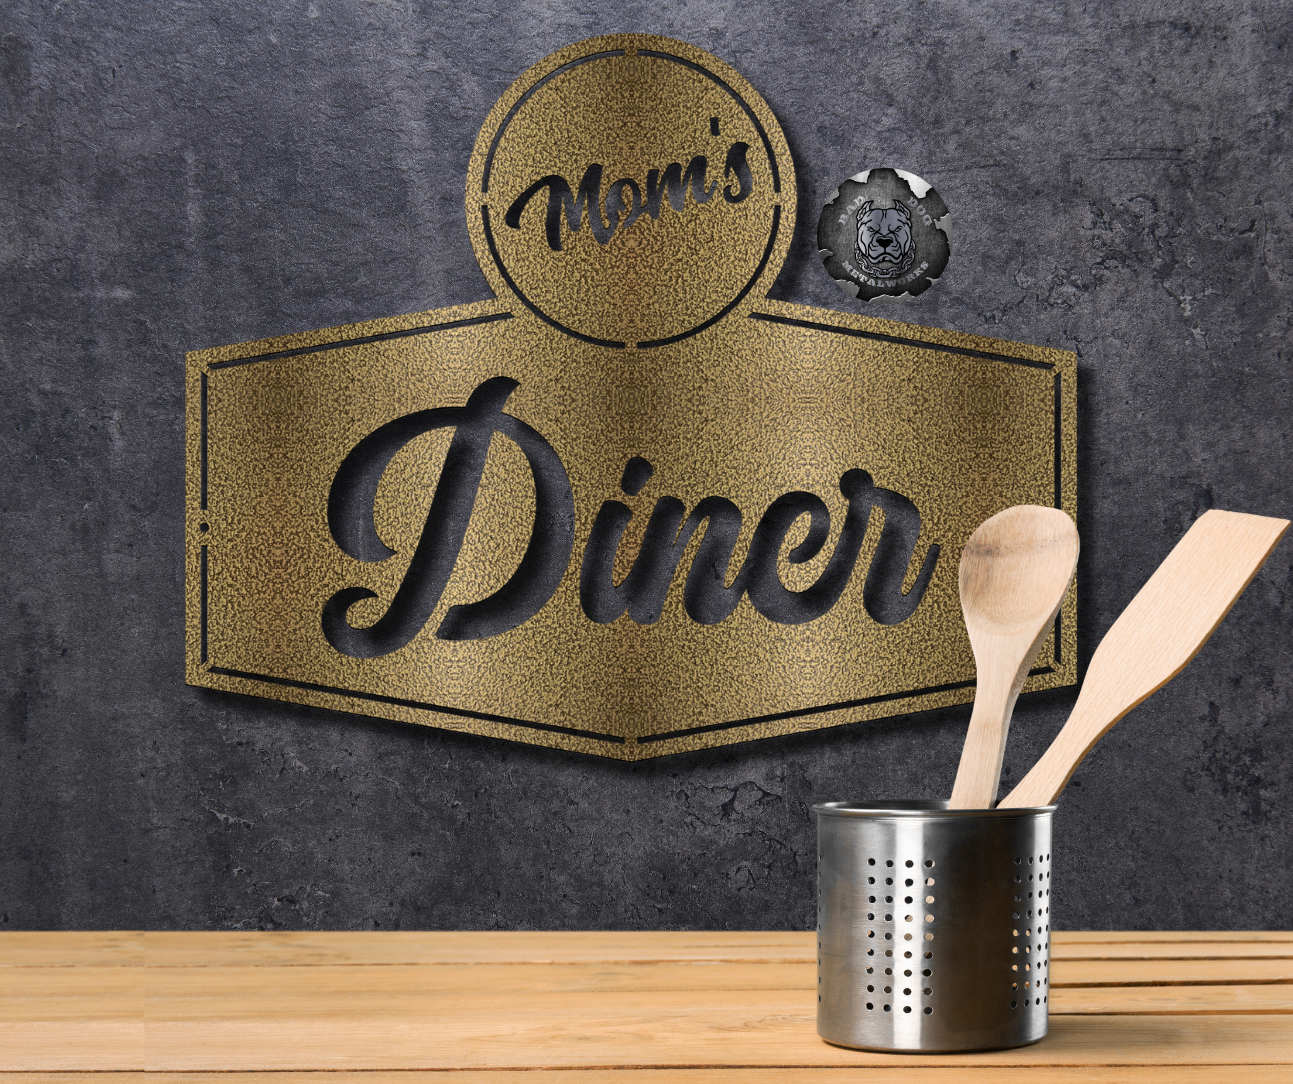 Mom's Diner